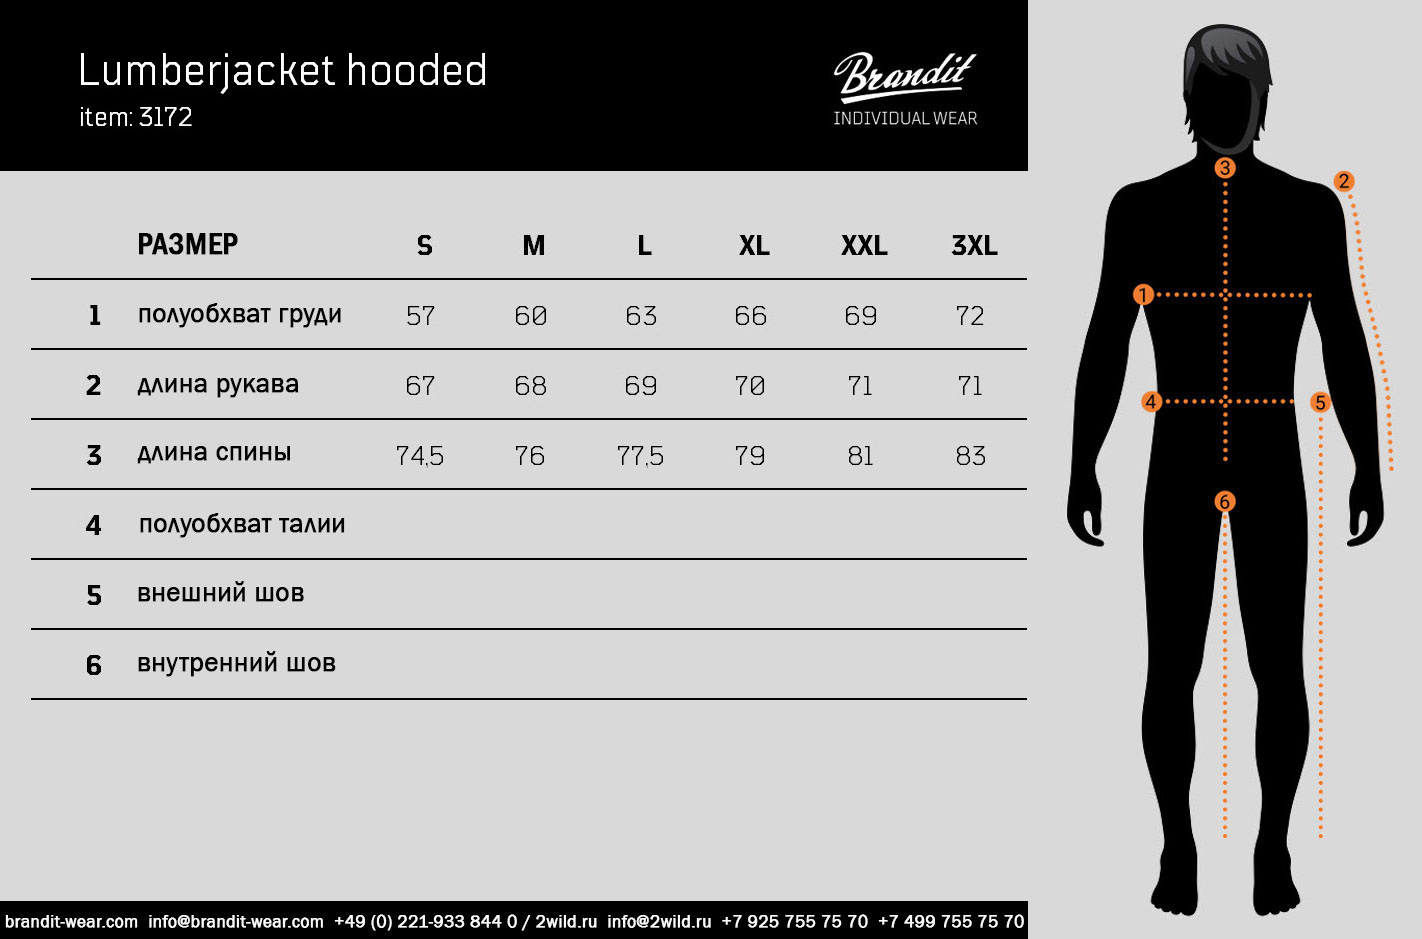 Куртка Brandit Lumber Jacket Hooded размеры